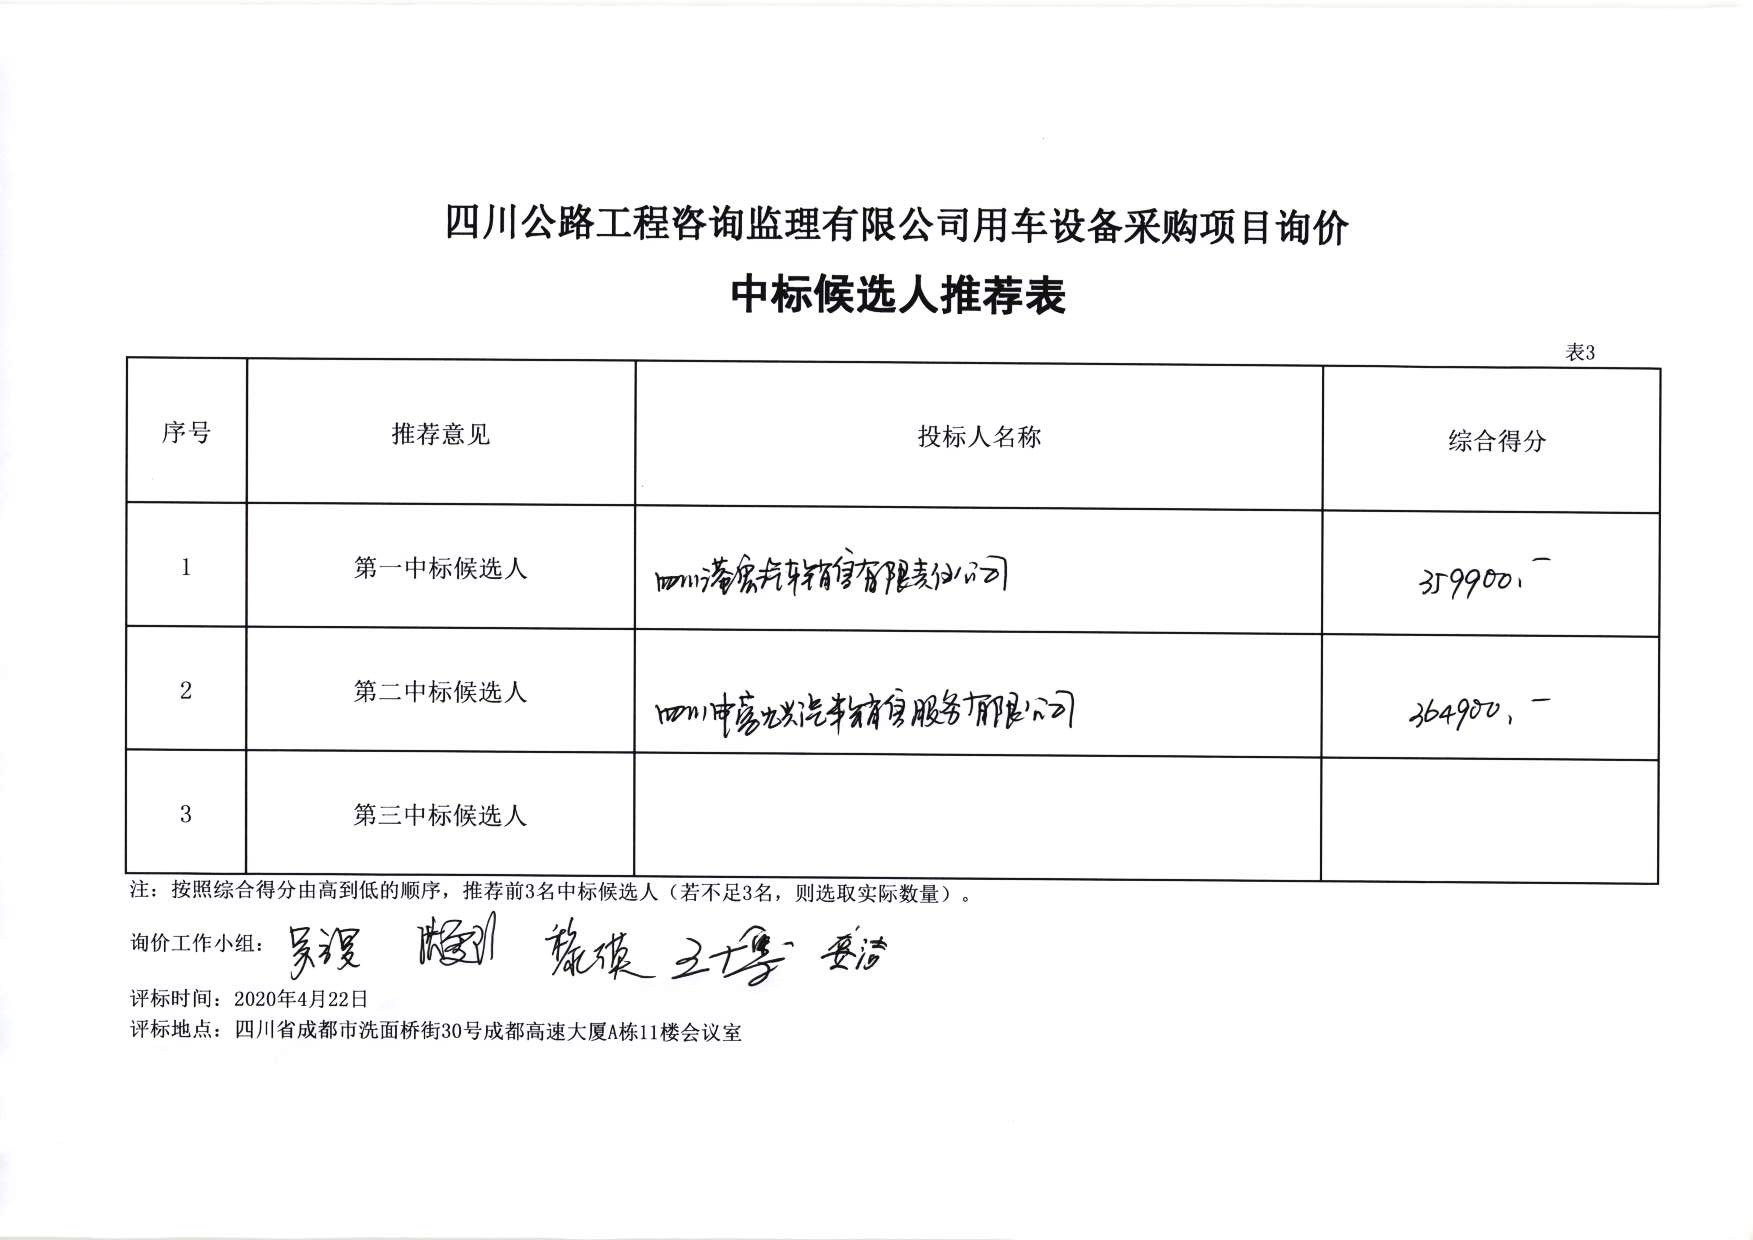 HTH华体会·(中国)官方网站用车设备采购项目询价中标候选人推荐表.jpg